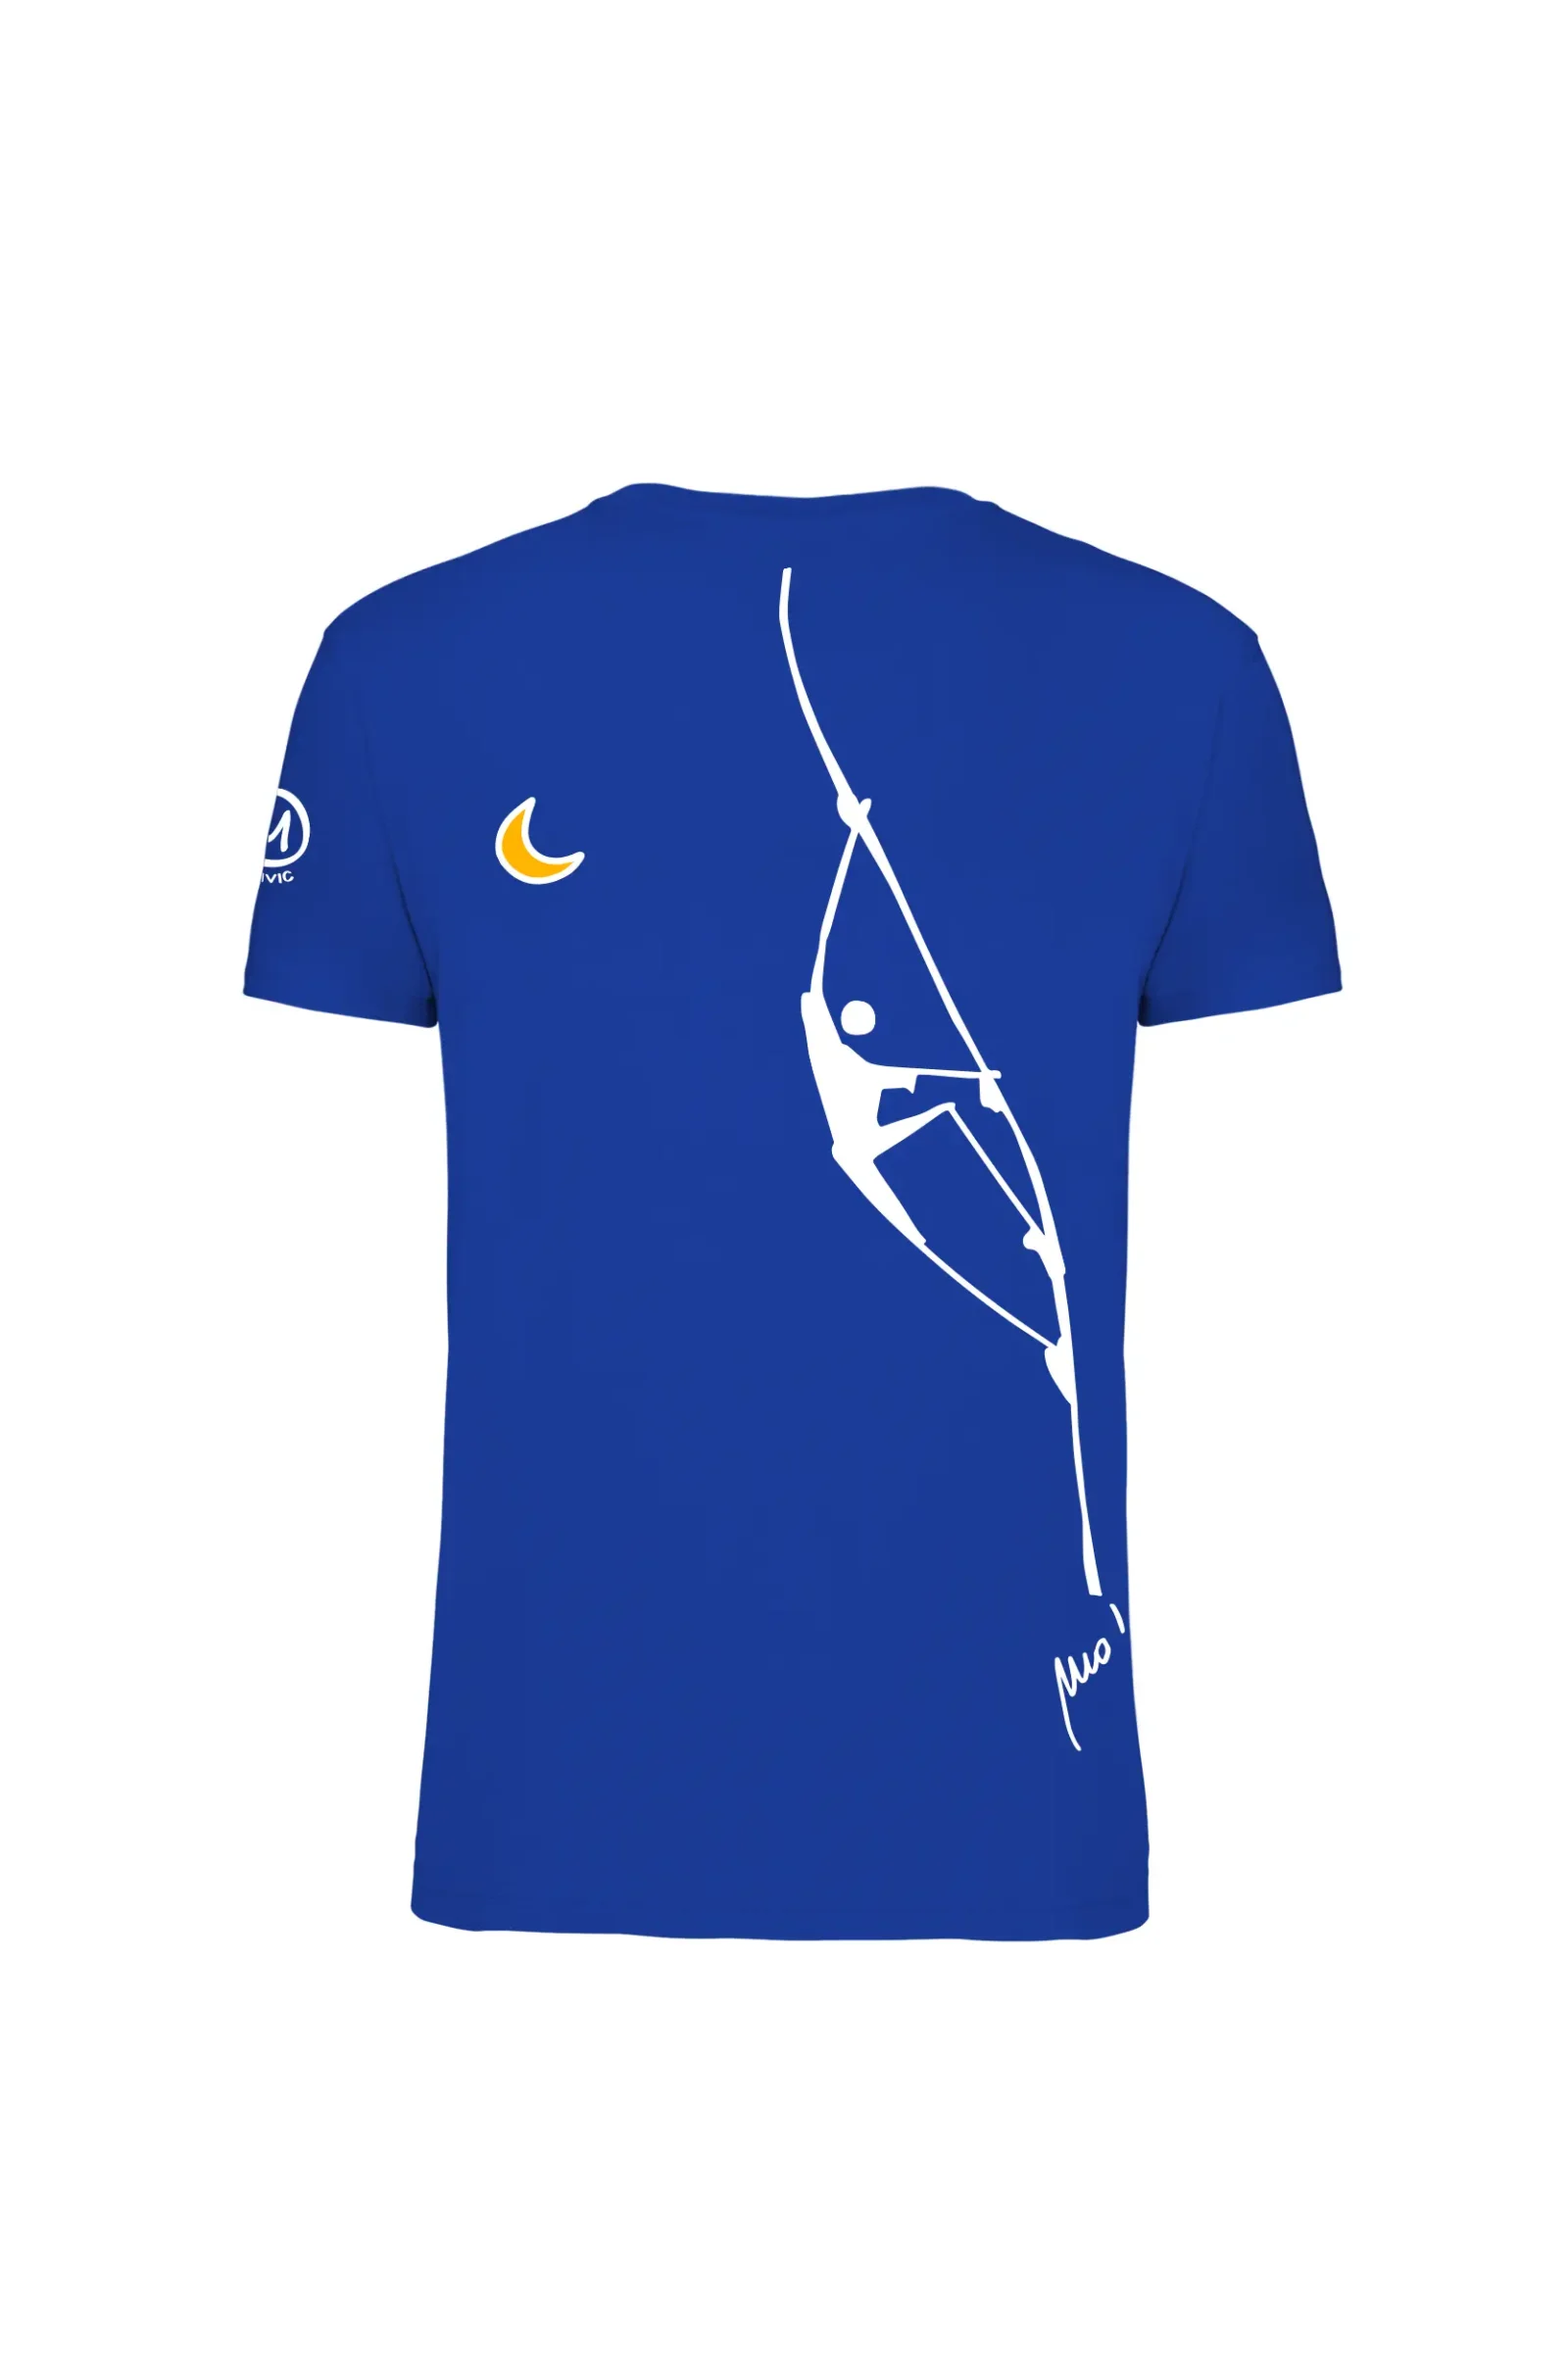 Royal blue men's t-shirt with "Teba" climbing graphics - Monvic HASH